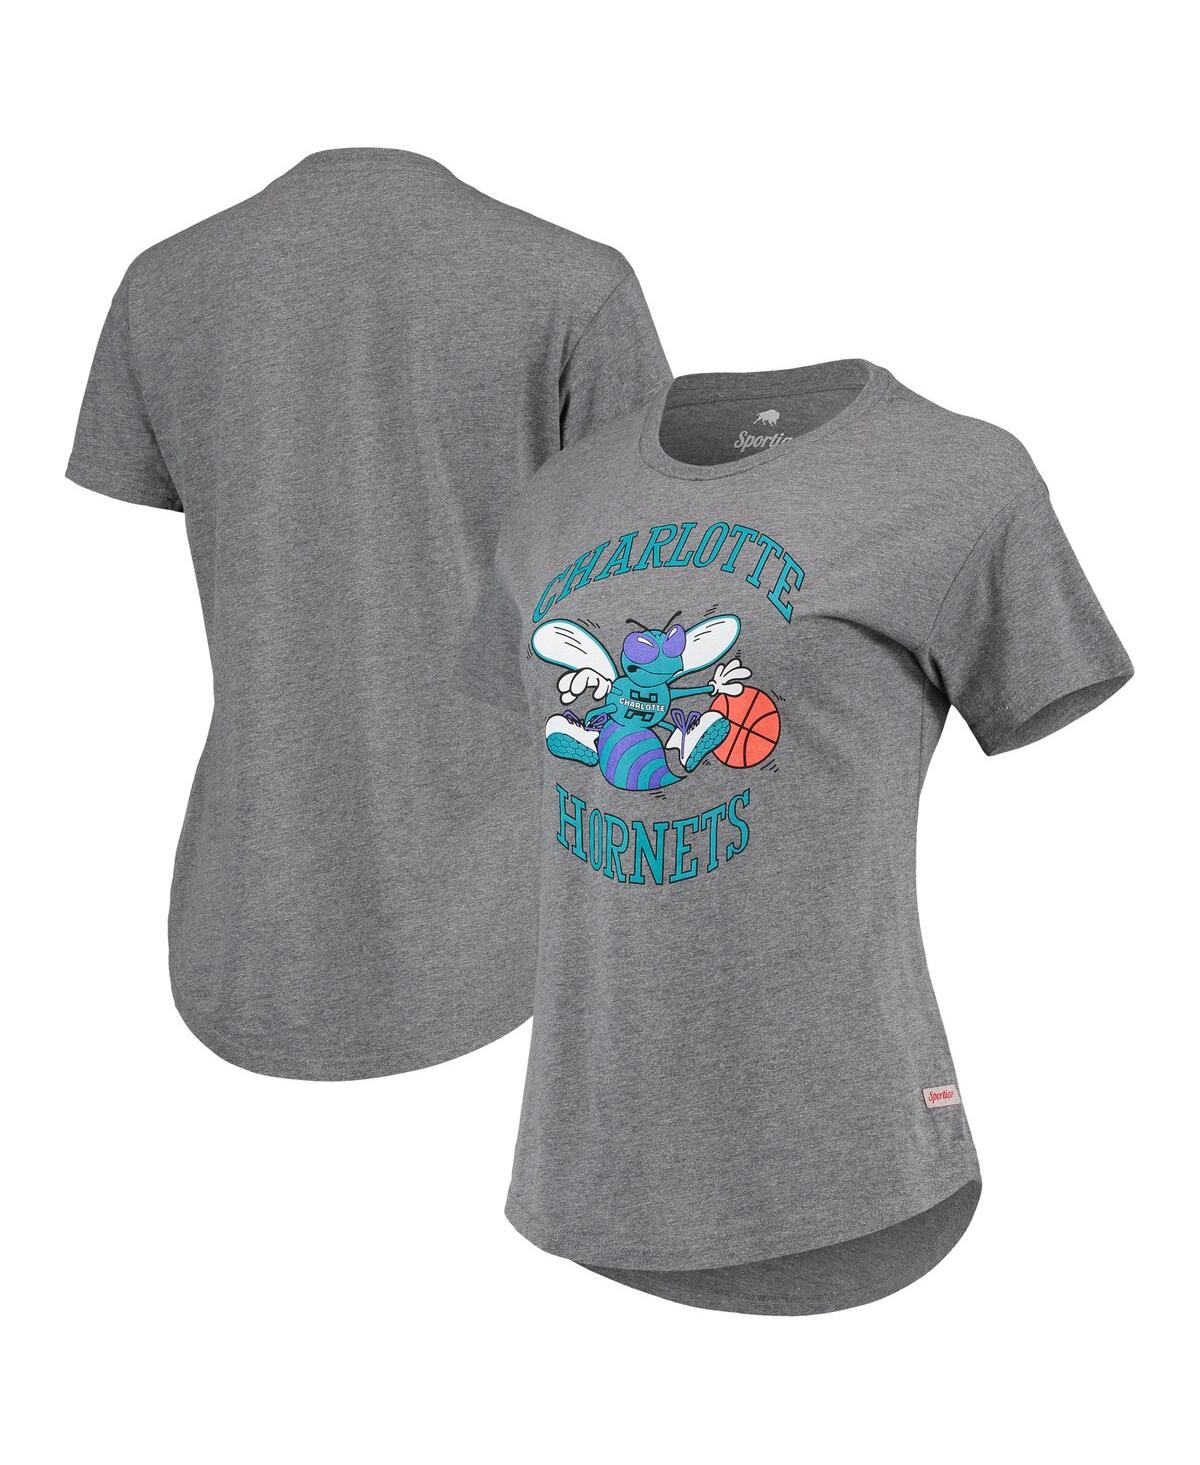 Women's Sportiqe Heathered Gray Charlotte Hornets Tri-Blend Phoebe T-shirt - Heathered Gray